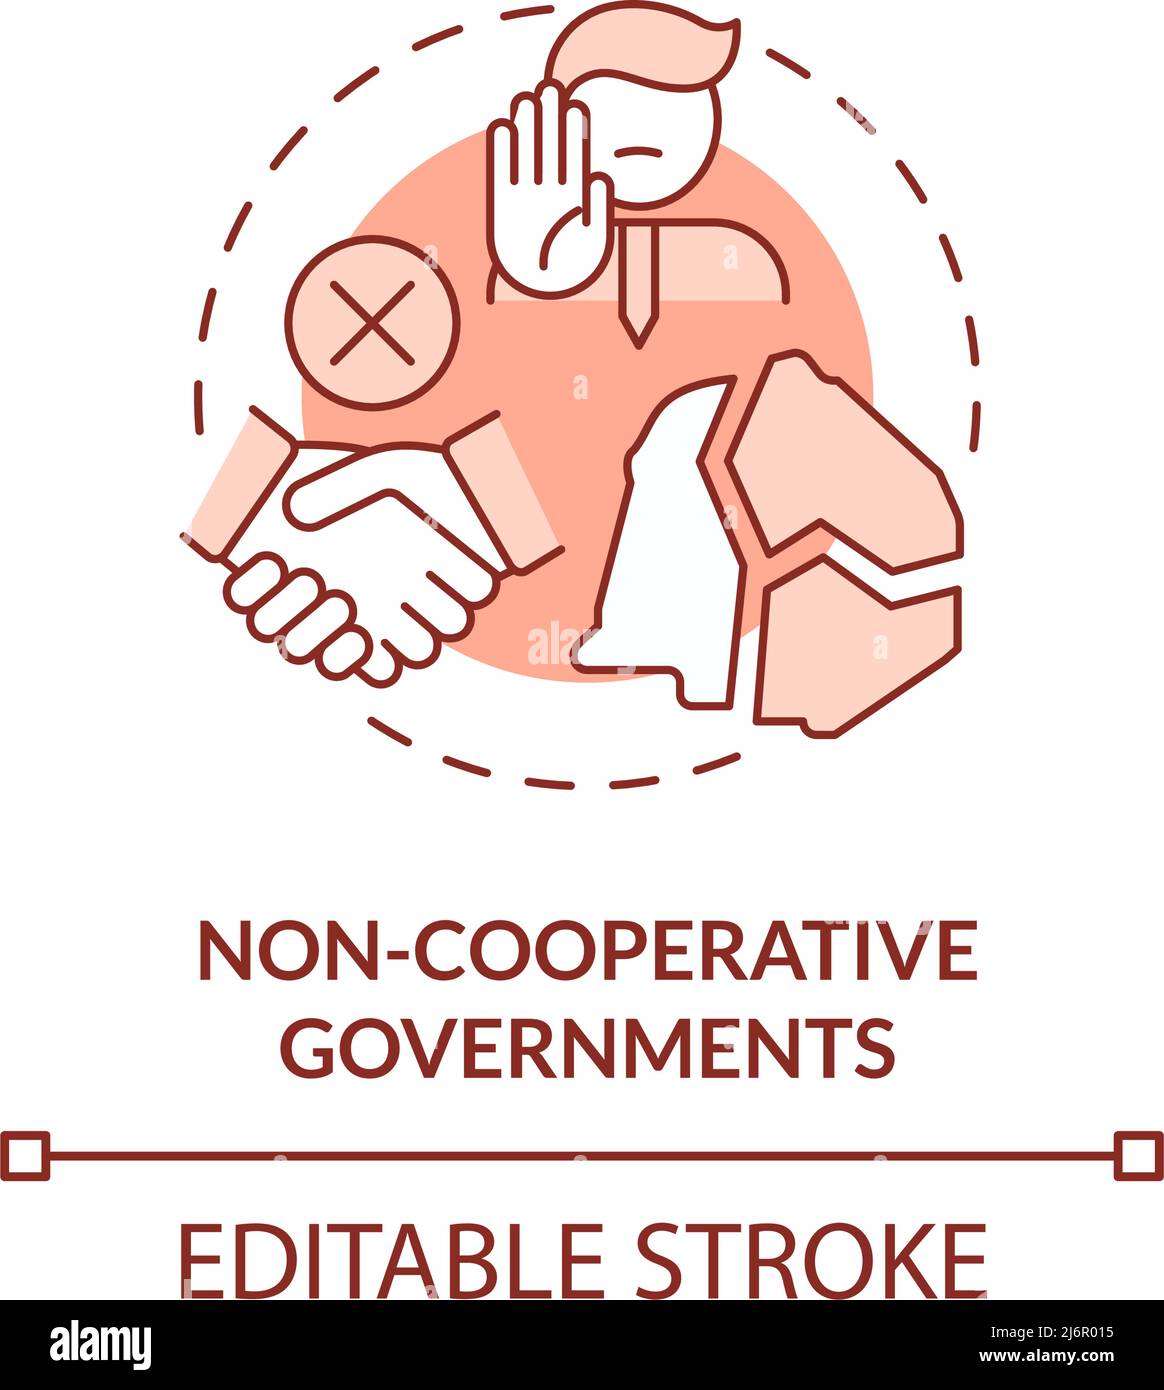 Non cooperative governments terracotta concept icon Stock Vector